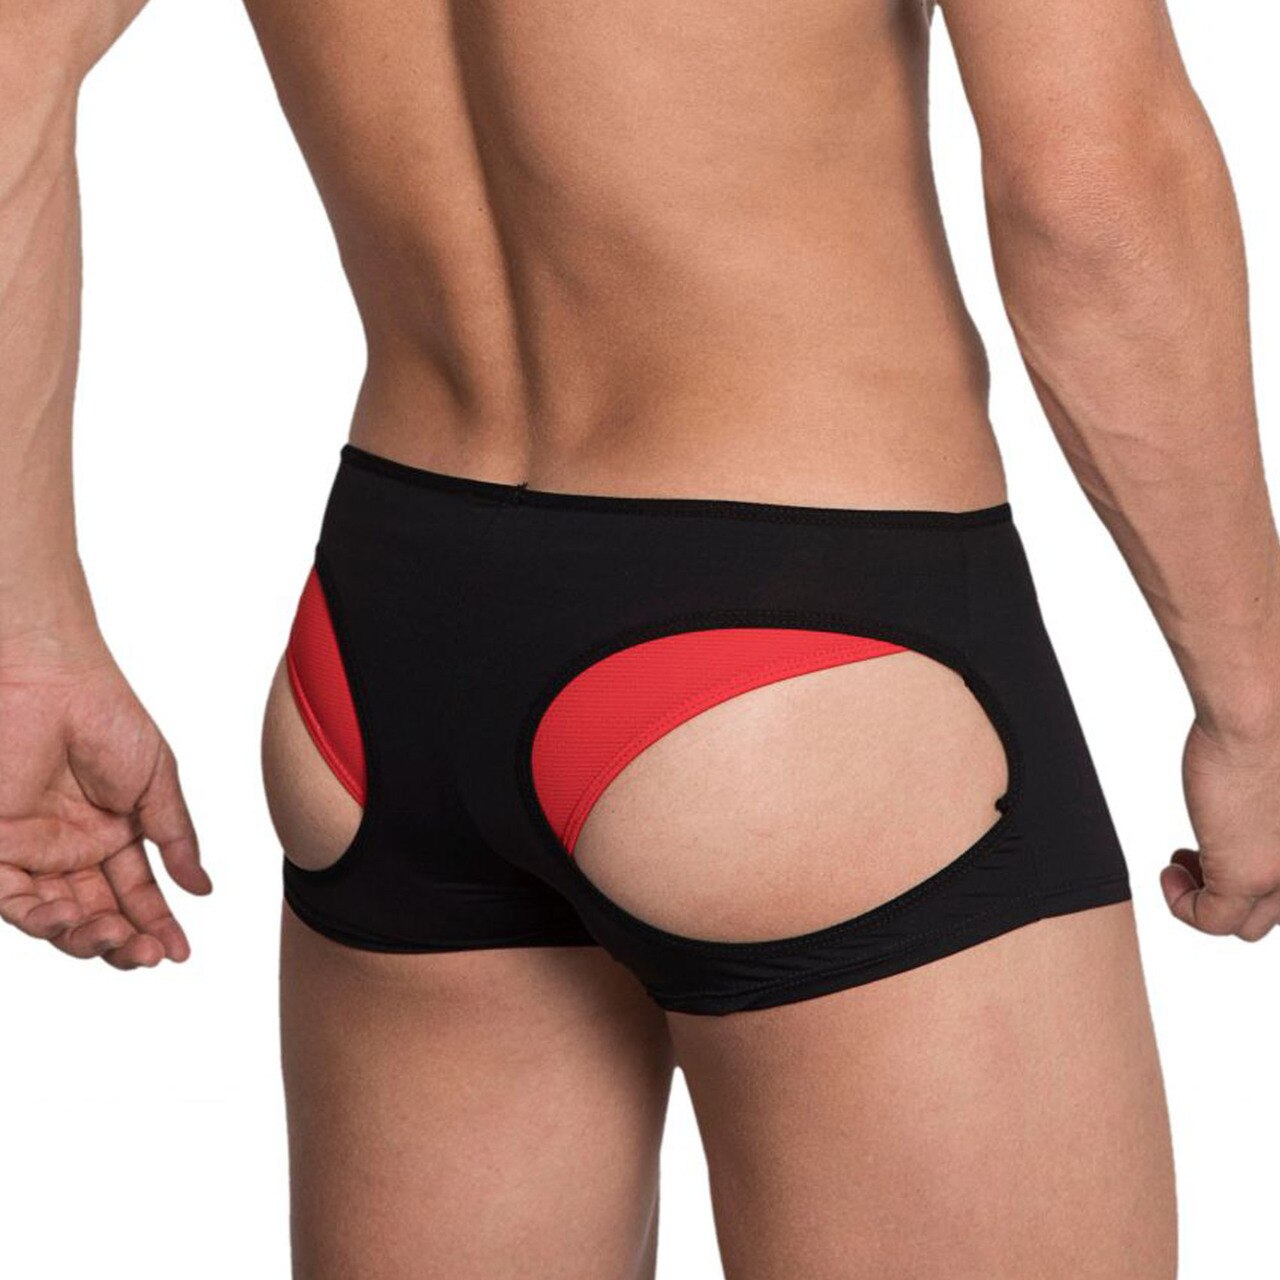 JCSTK - Mens Hidden Seduction Open Front & Back Hot Pants Shorts Black & Red